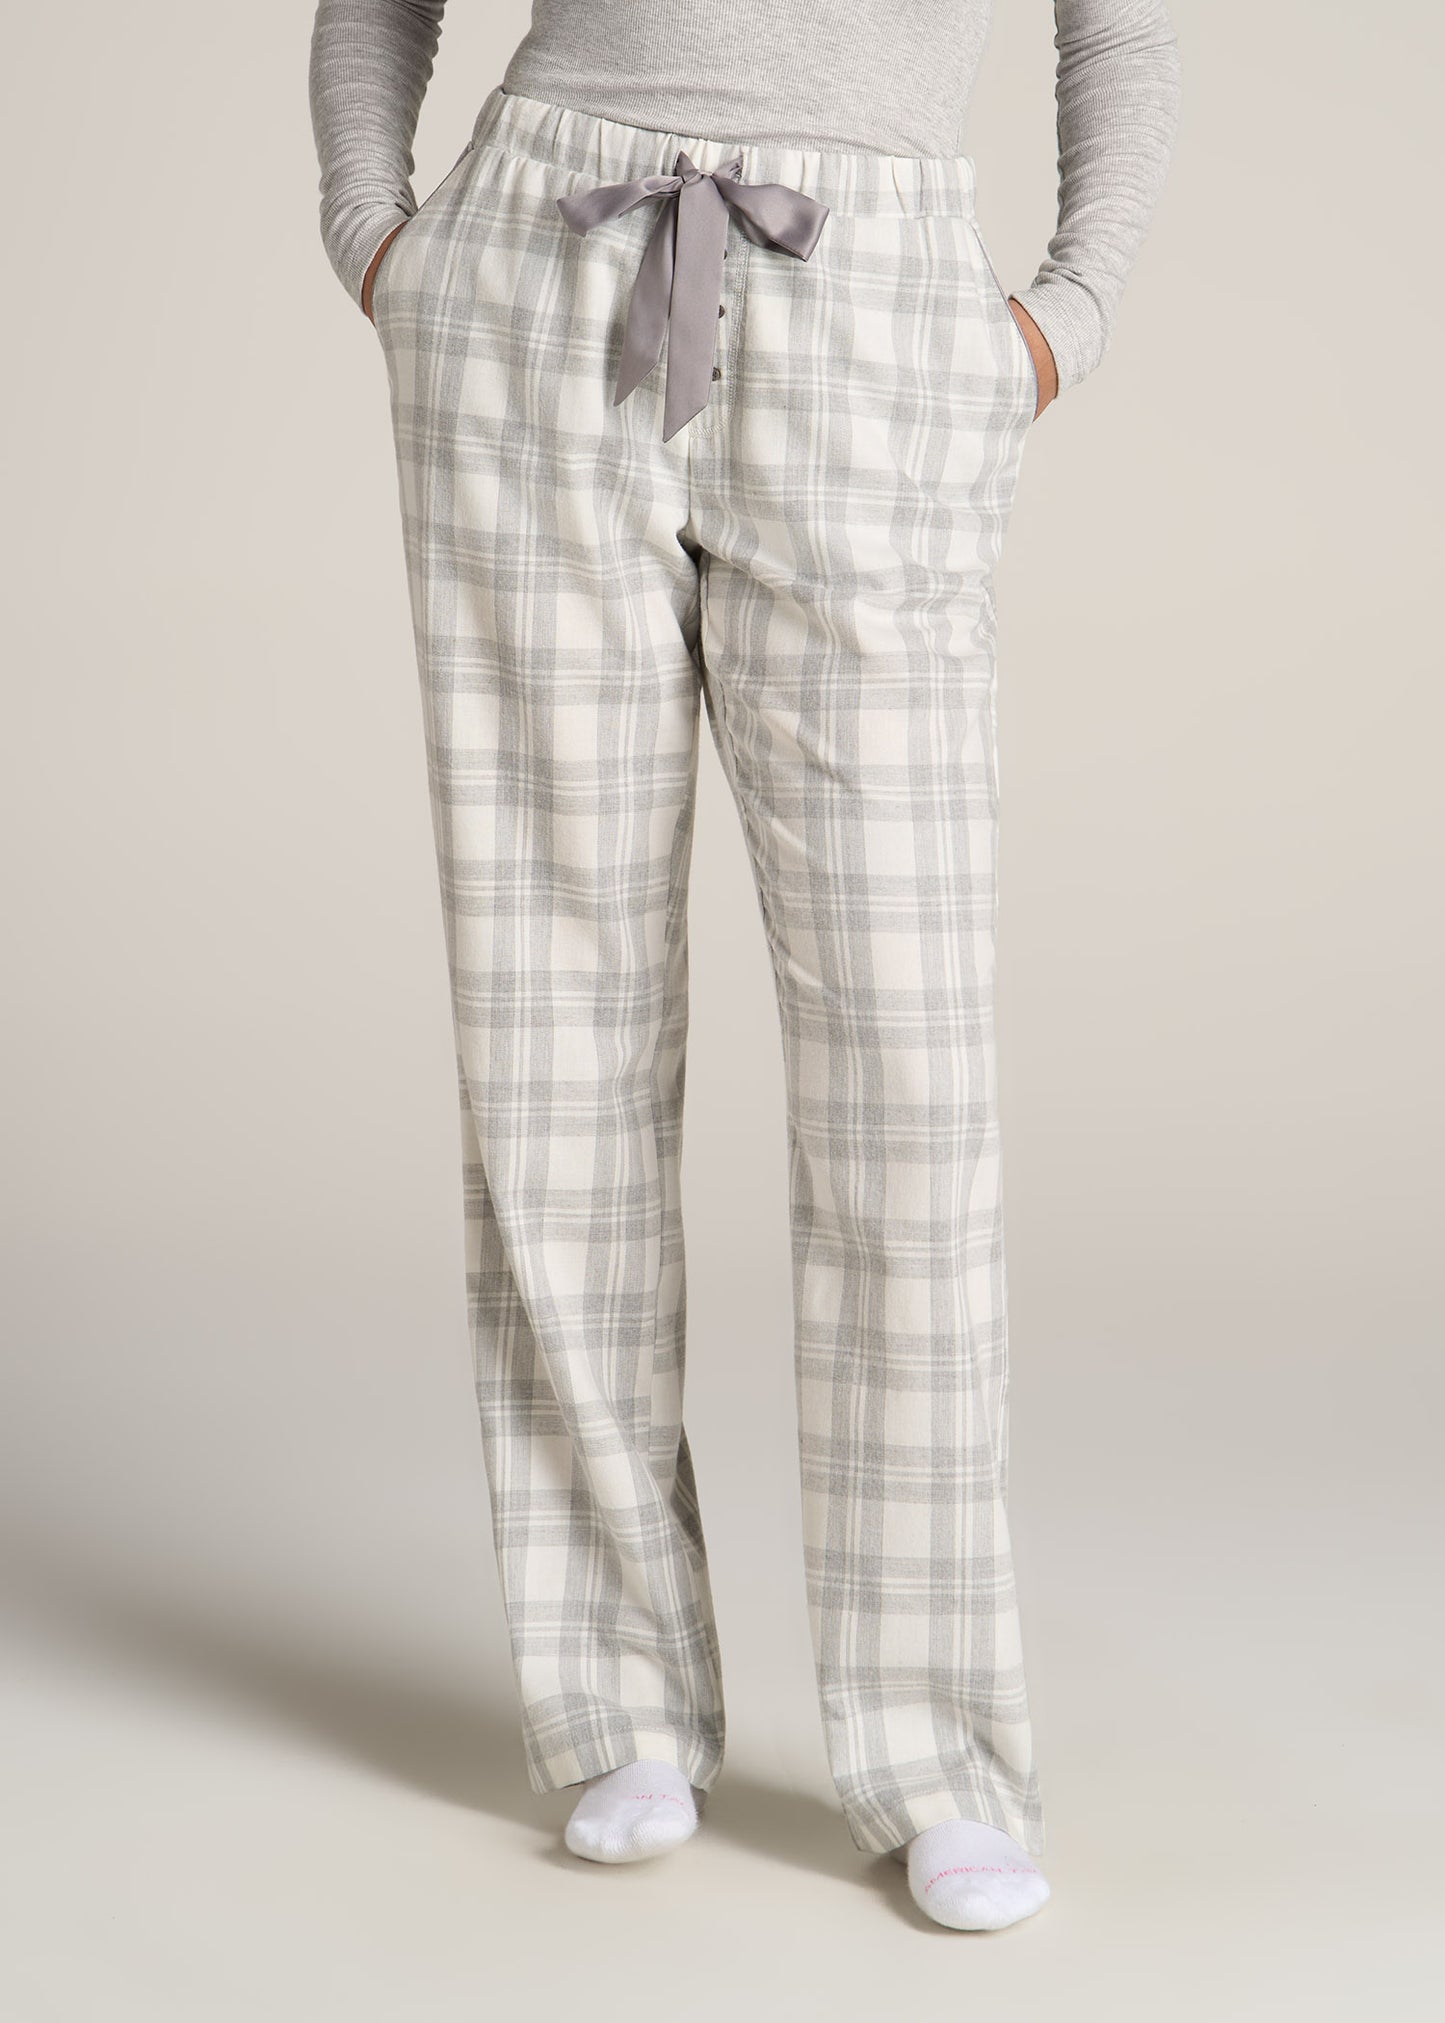 American-Tall-Women-Tie-Waist-Open-Bottom-Flannel-PJ-Pants-Heather-Grey-White-Plaid-front